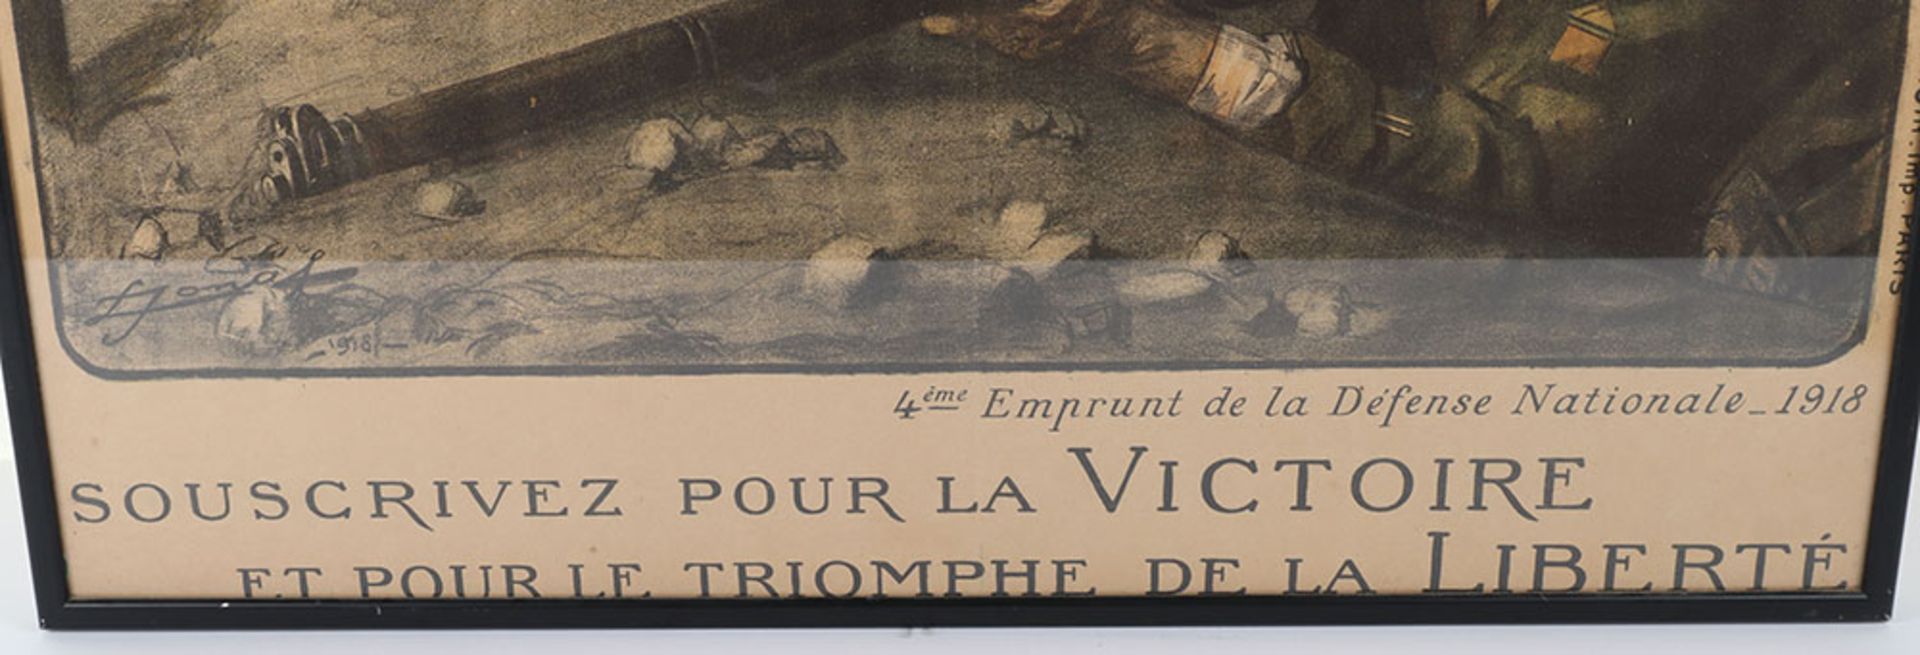 Impressive Original 1918 French Poster - Image 6 of 6